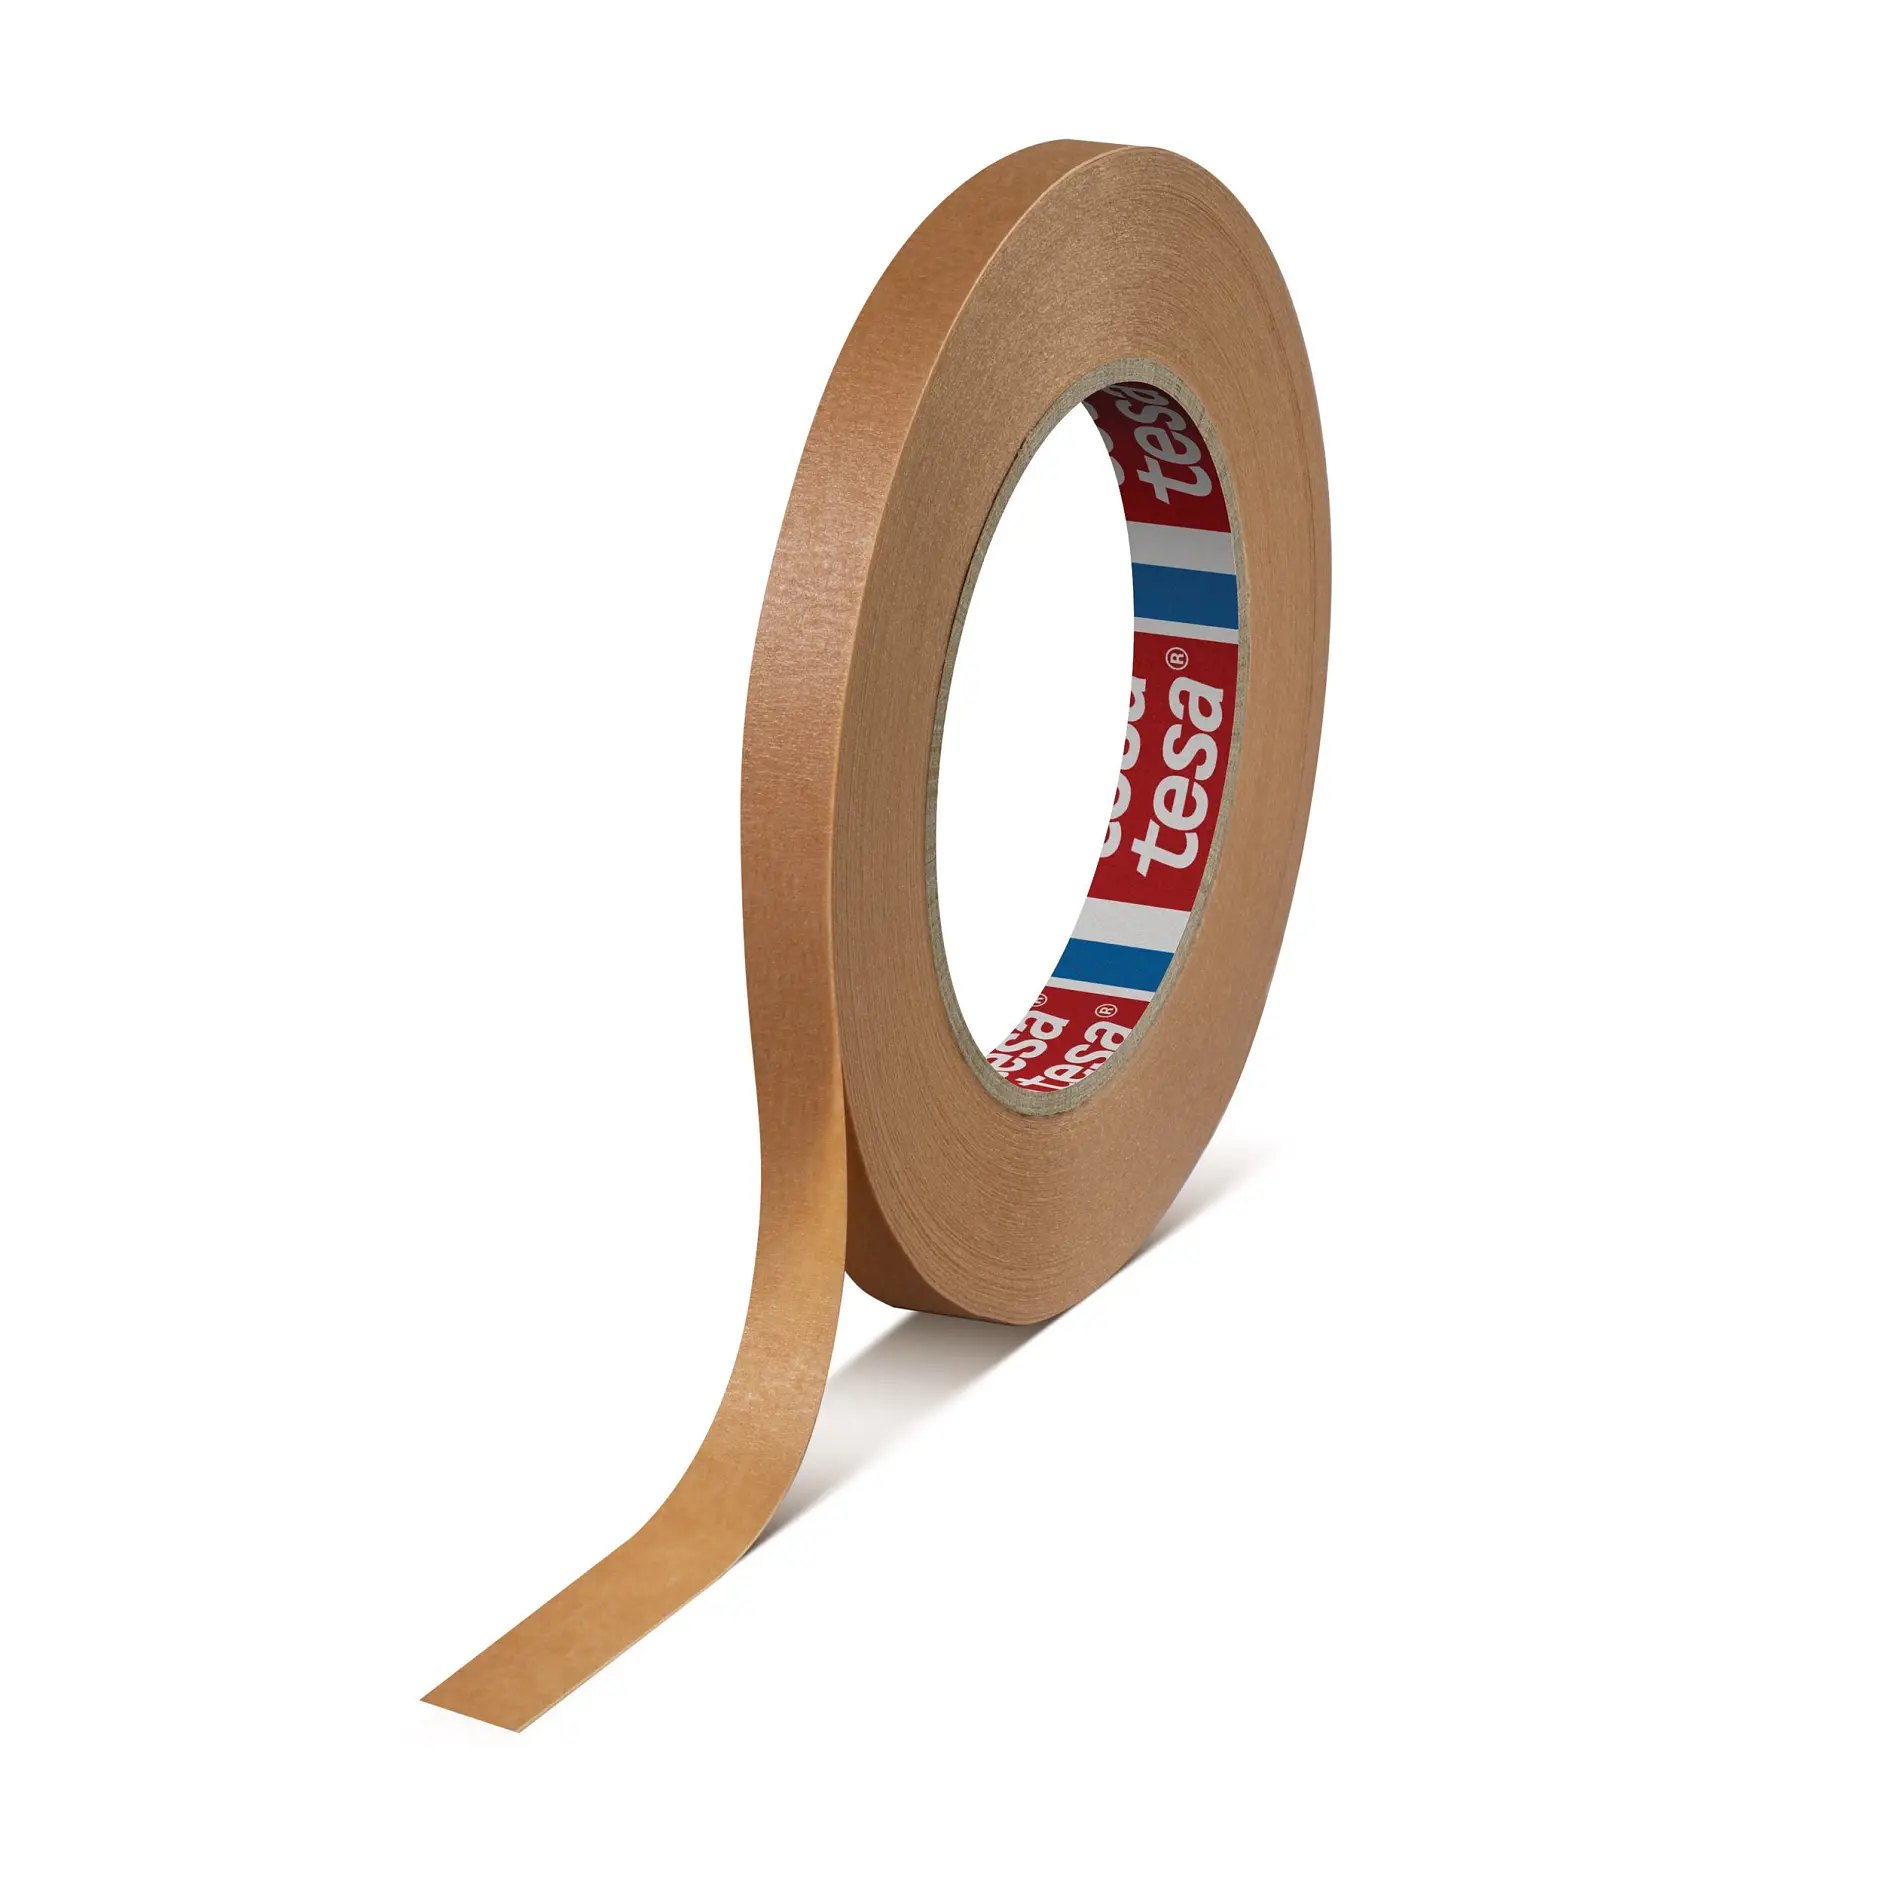 tesa 4318 high performance paper masking tape up to 160°C light brown 043180006302